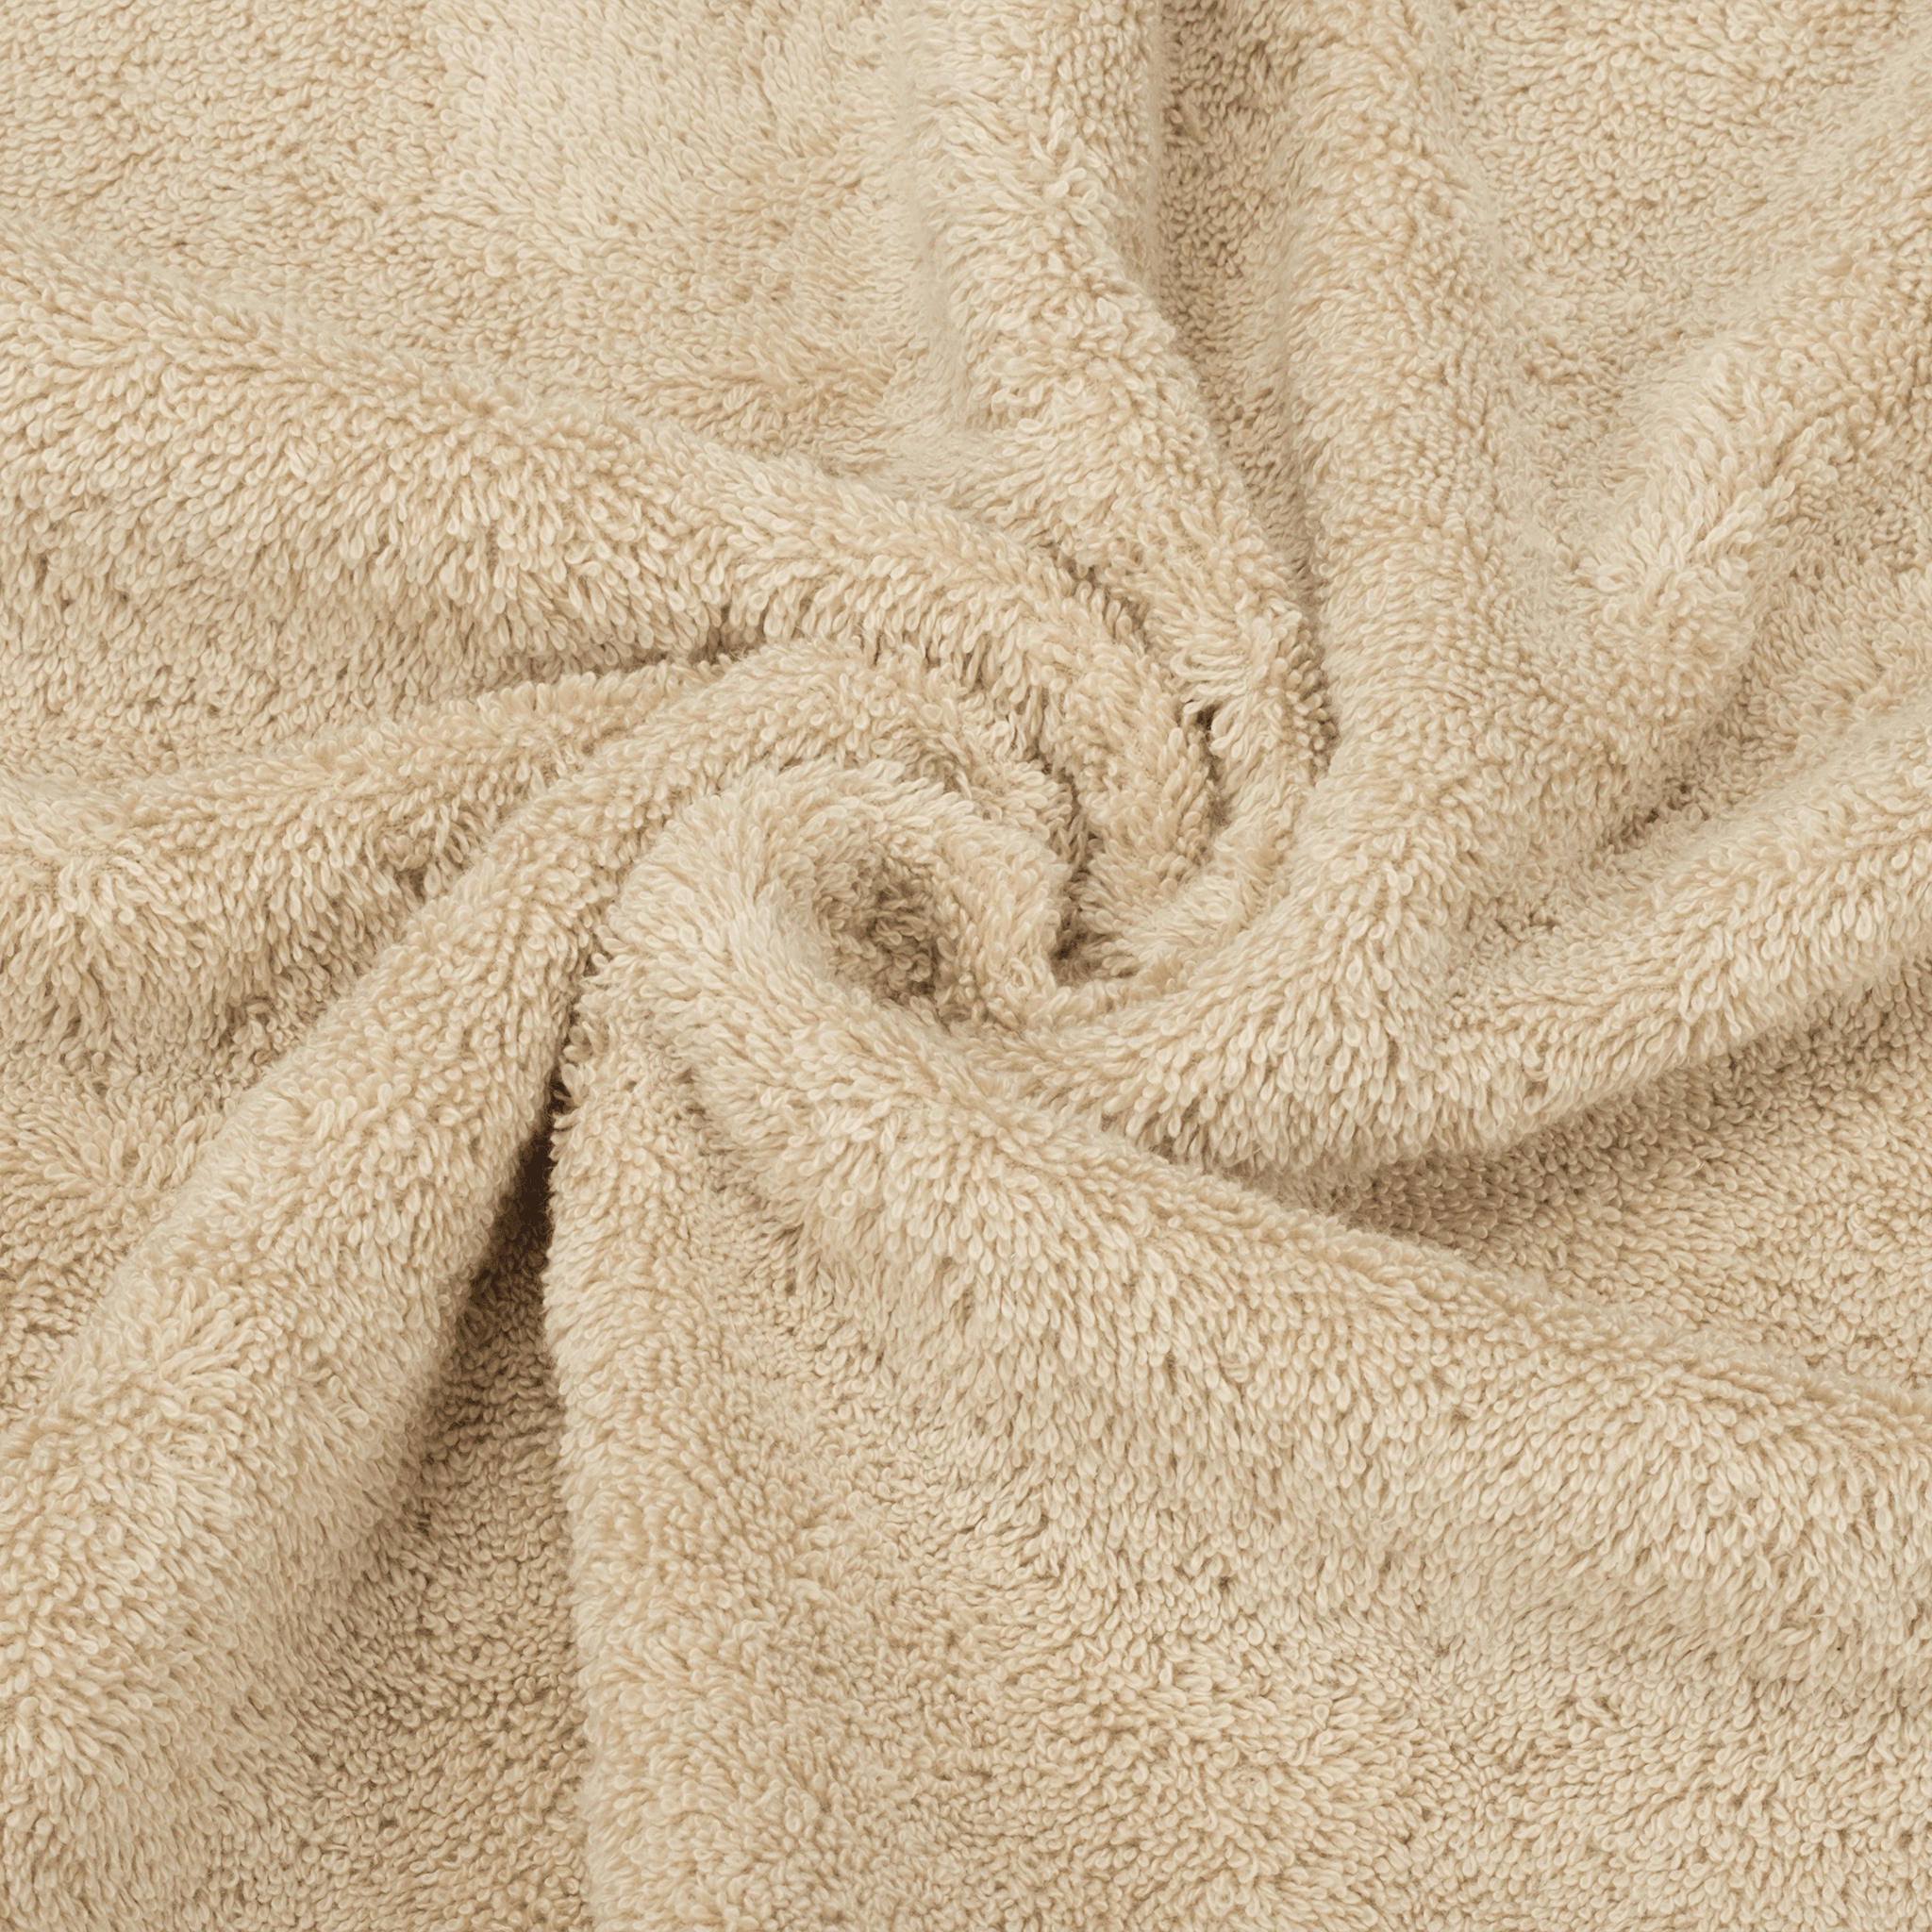 American Soft Linen - Single Piece Turkish Cotton Bath Towels - Sand-Taupe - 5